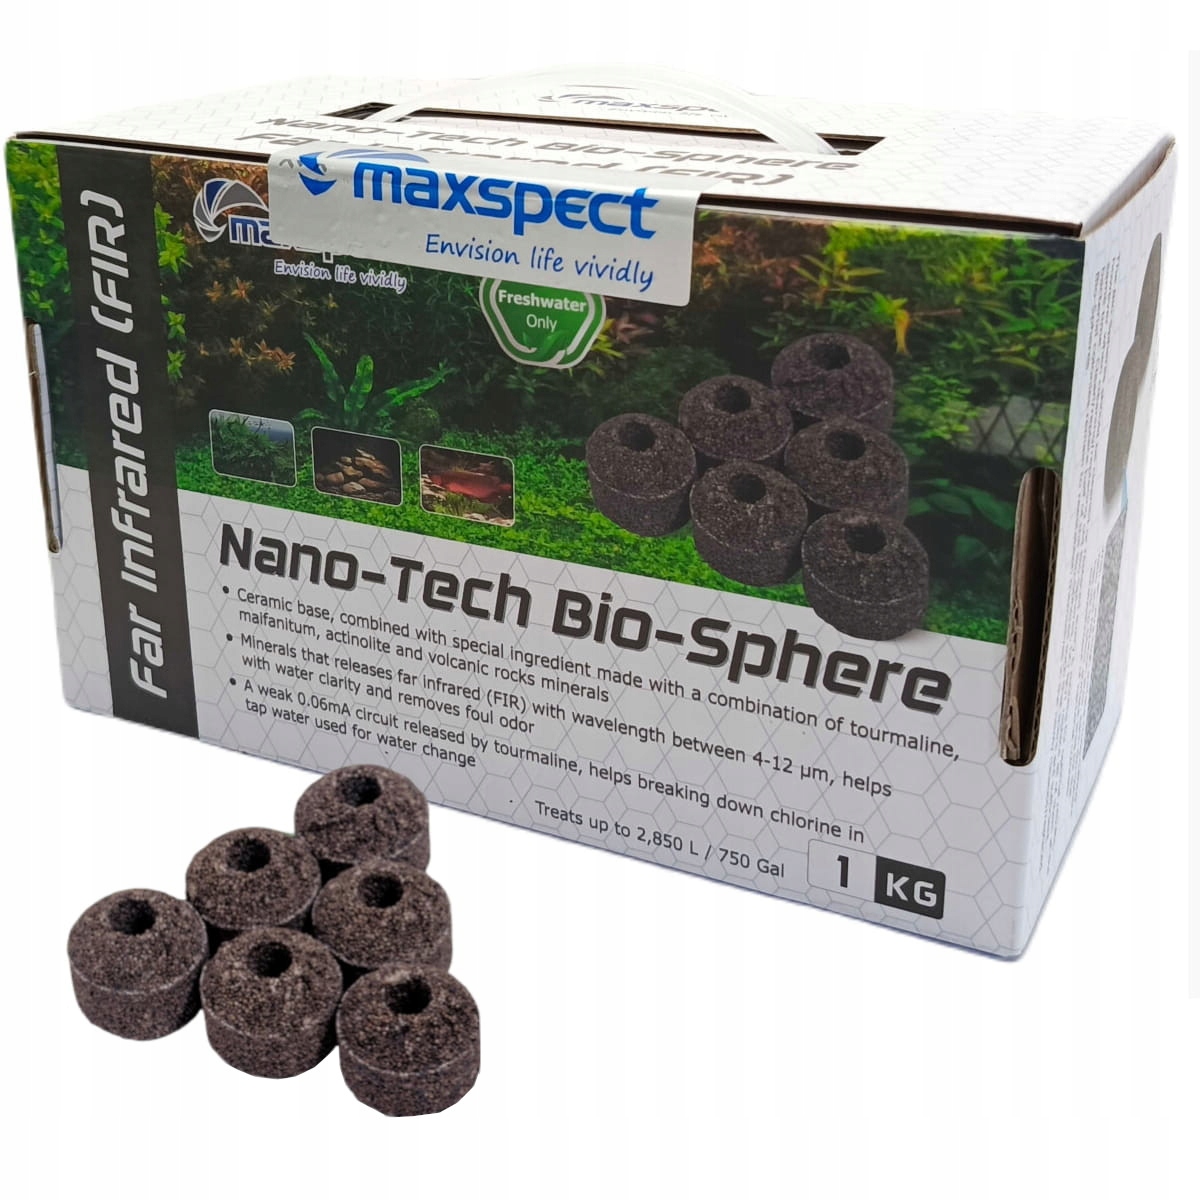 Maxspect Nano-Tech Bio-Sphere Fir 1kg Biologická vložka do filtru